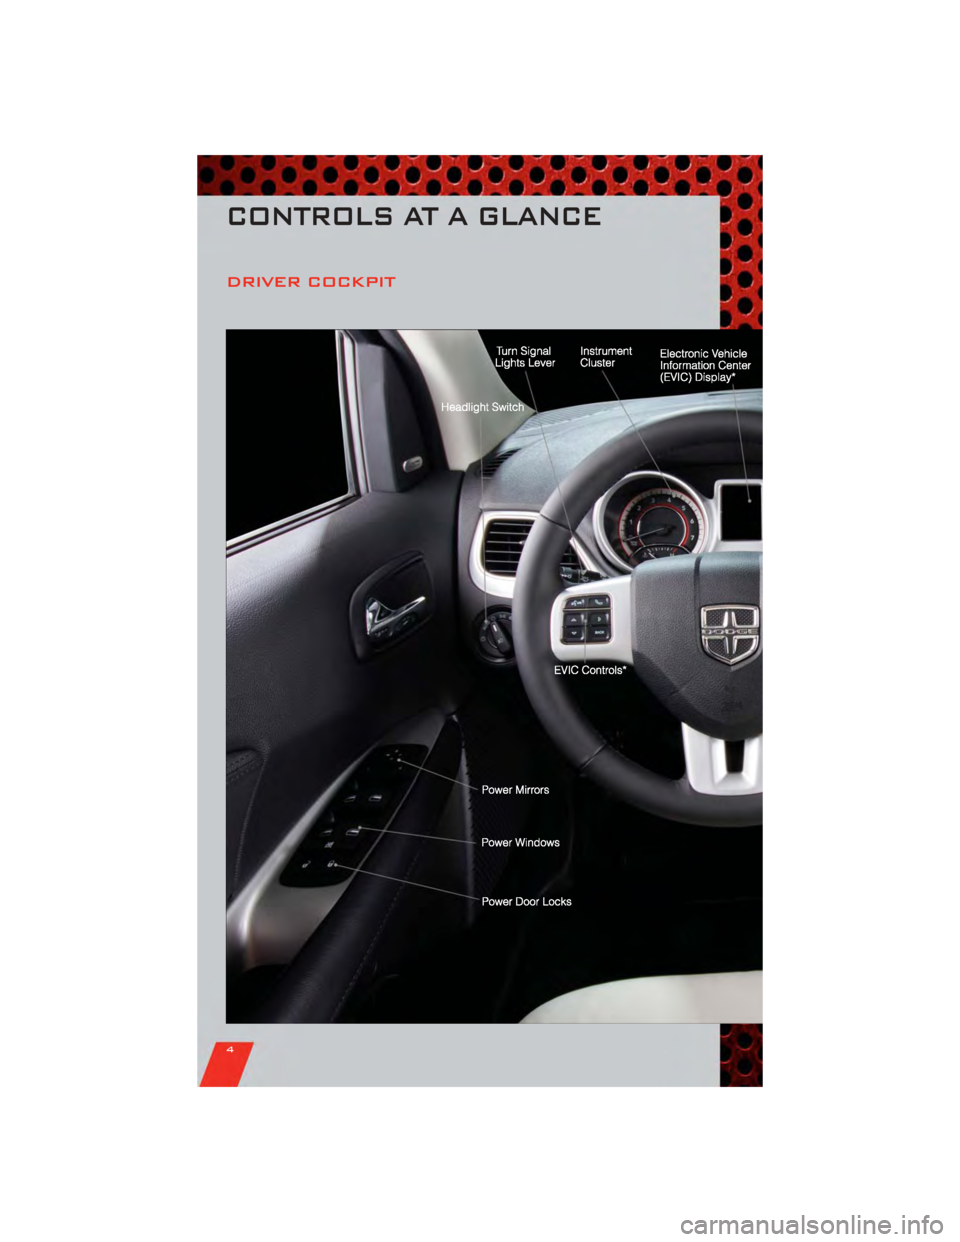 DODGE JOURNEY 2011 1.G User Guide DRIVER COCKPIT
CONTROLS AT A GLANCE
4 